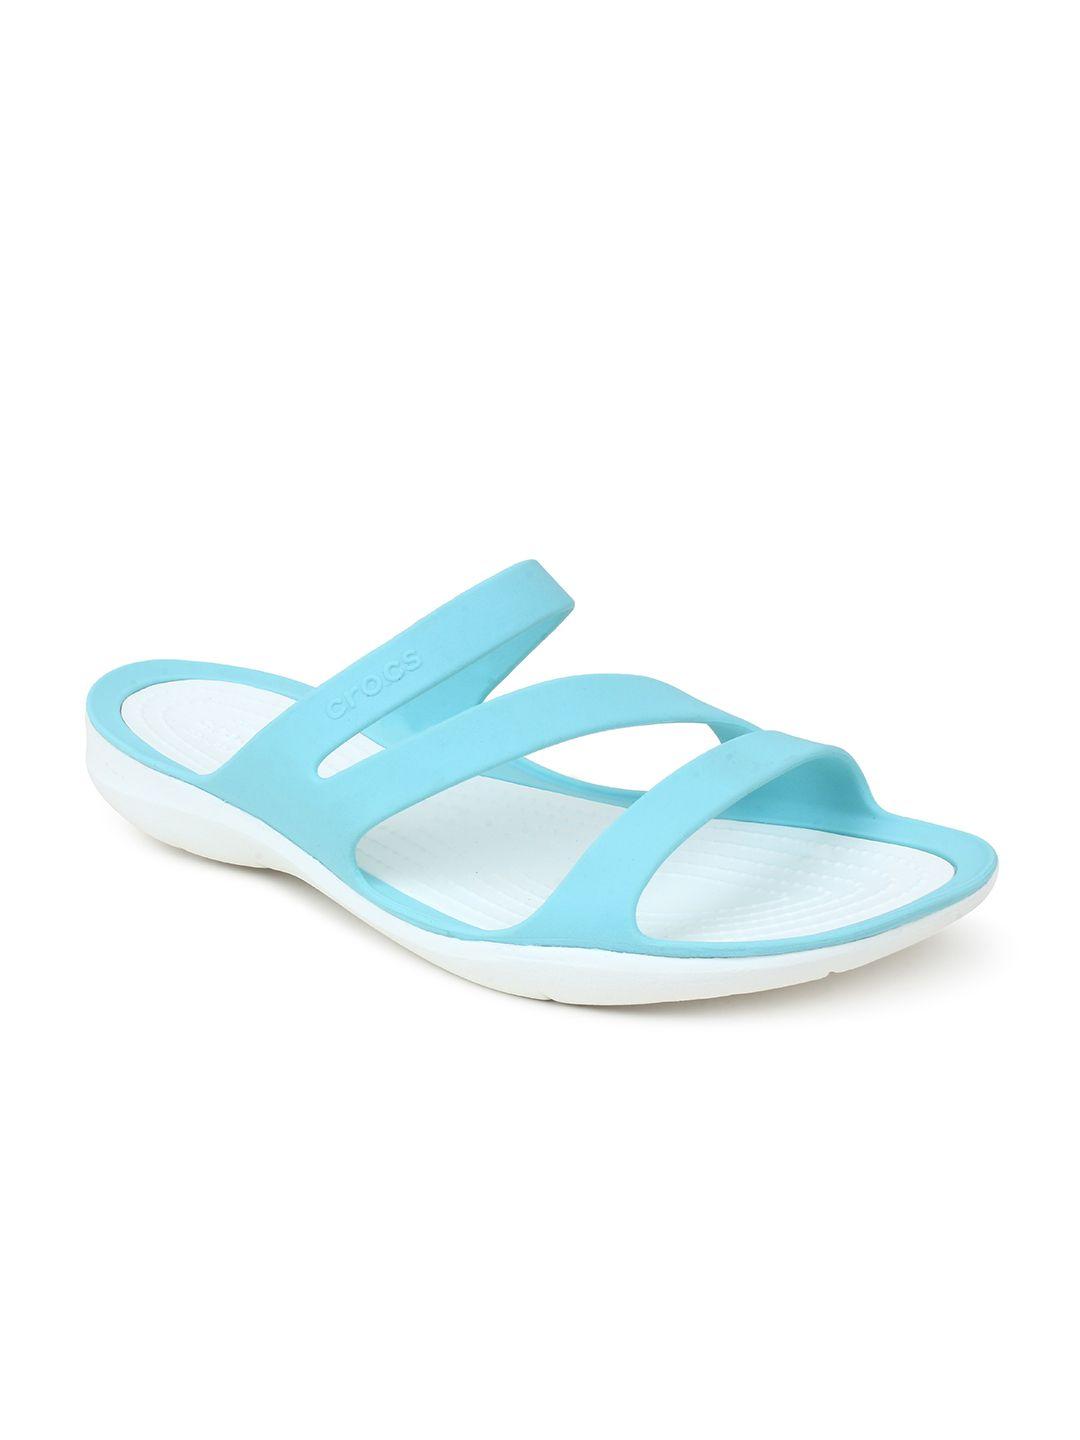 crocs-women-blue-&-white-open-toe-flats